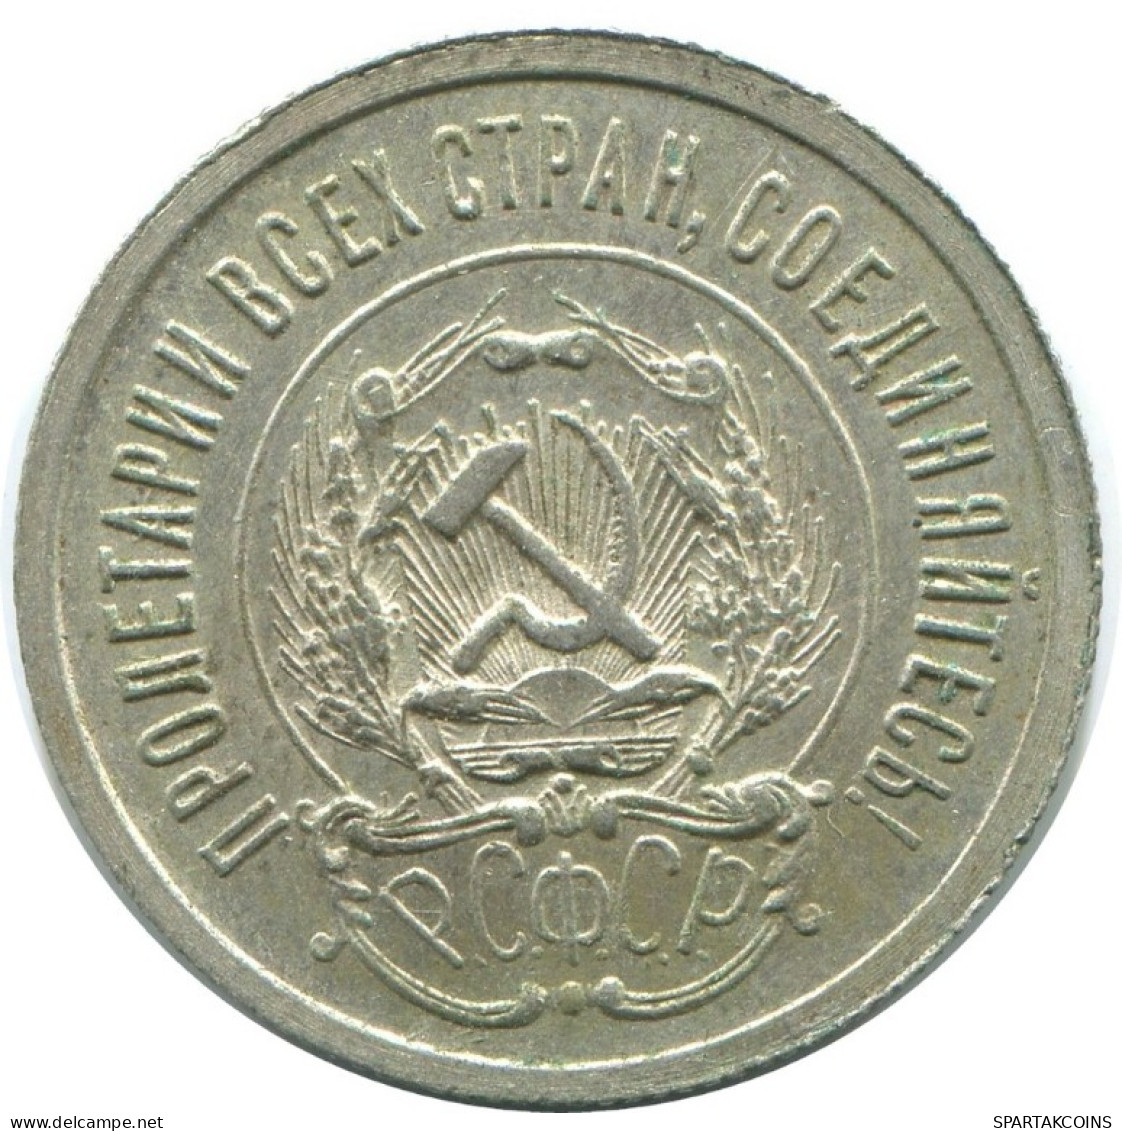 20 KOPEKS 1923 RUSSIA RSFSR SILVER Coin HIGH GRADE #AF682.U.A - Russia